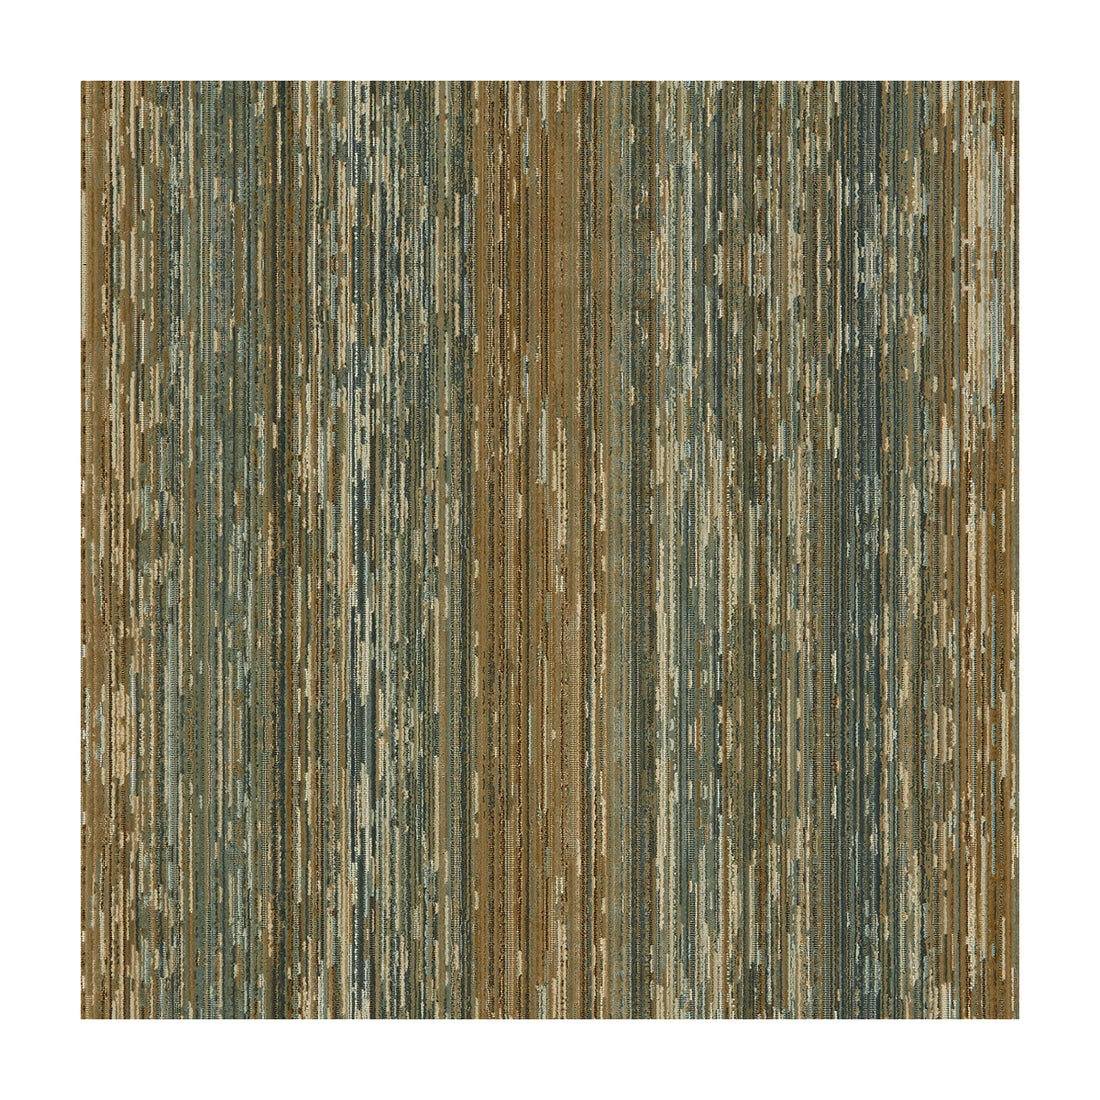 Abelard Velvet fabric in neutral color - pattern 8015150.611.0 - by Brunschwig &amp; Fils in the L&